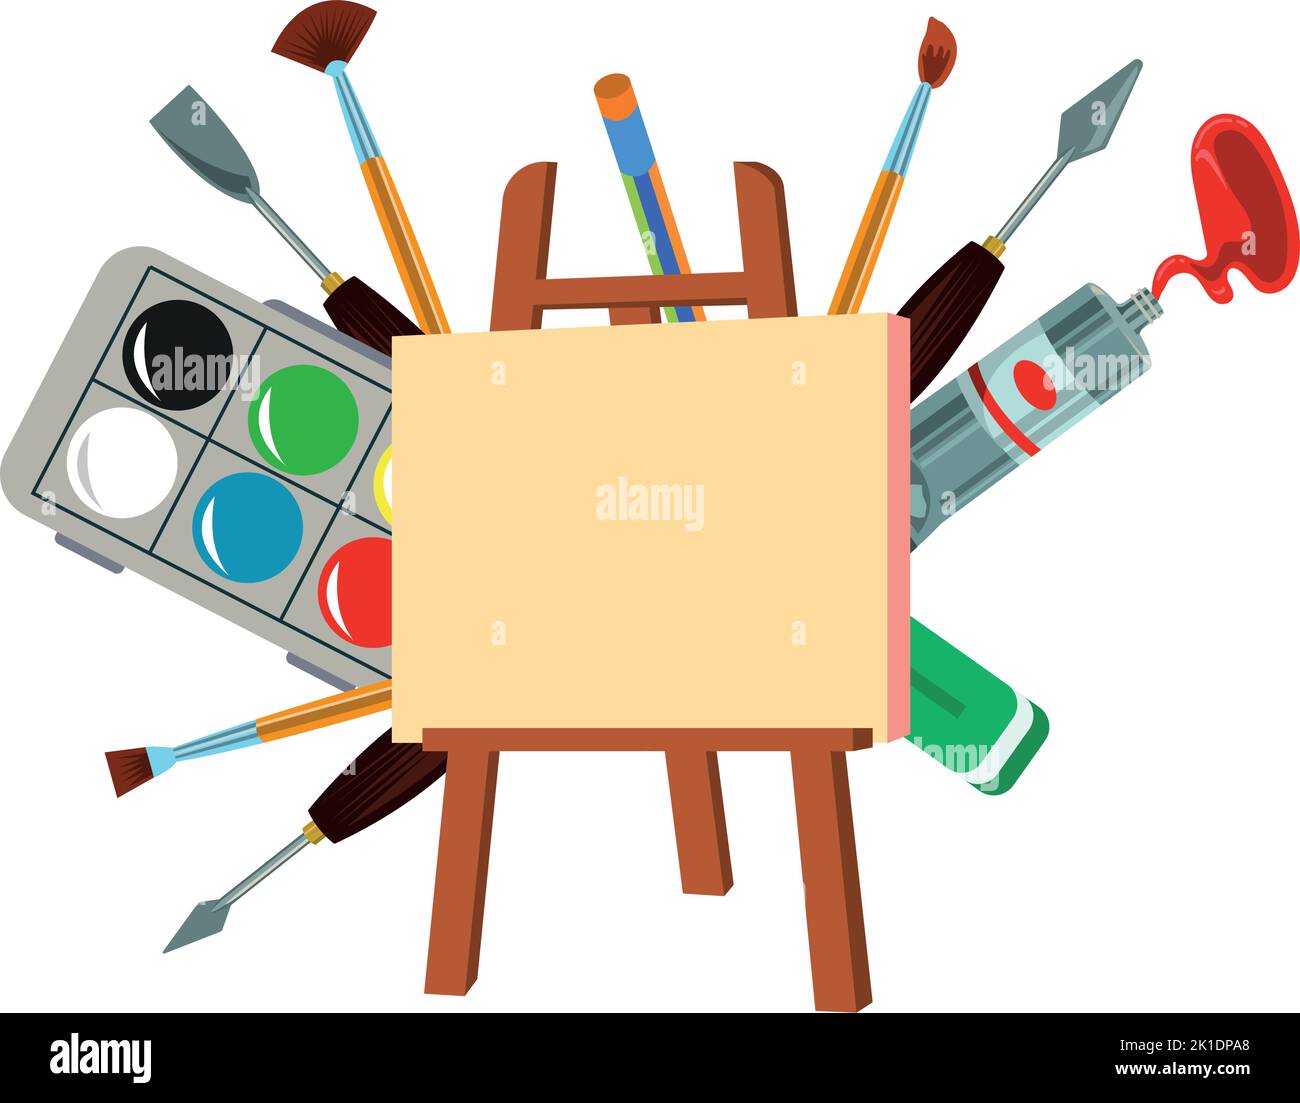 https://c8.alamy.com/comp/2K1DPA8/art-studio-hand-drawn-art-tools-and-supplies-set-palette-paintbrush-pensil-oil-paint-watercolor-2K1DPA8.jpg